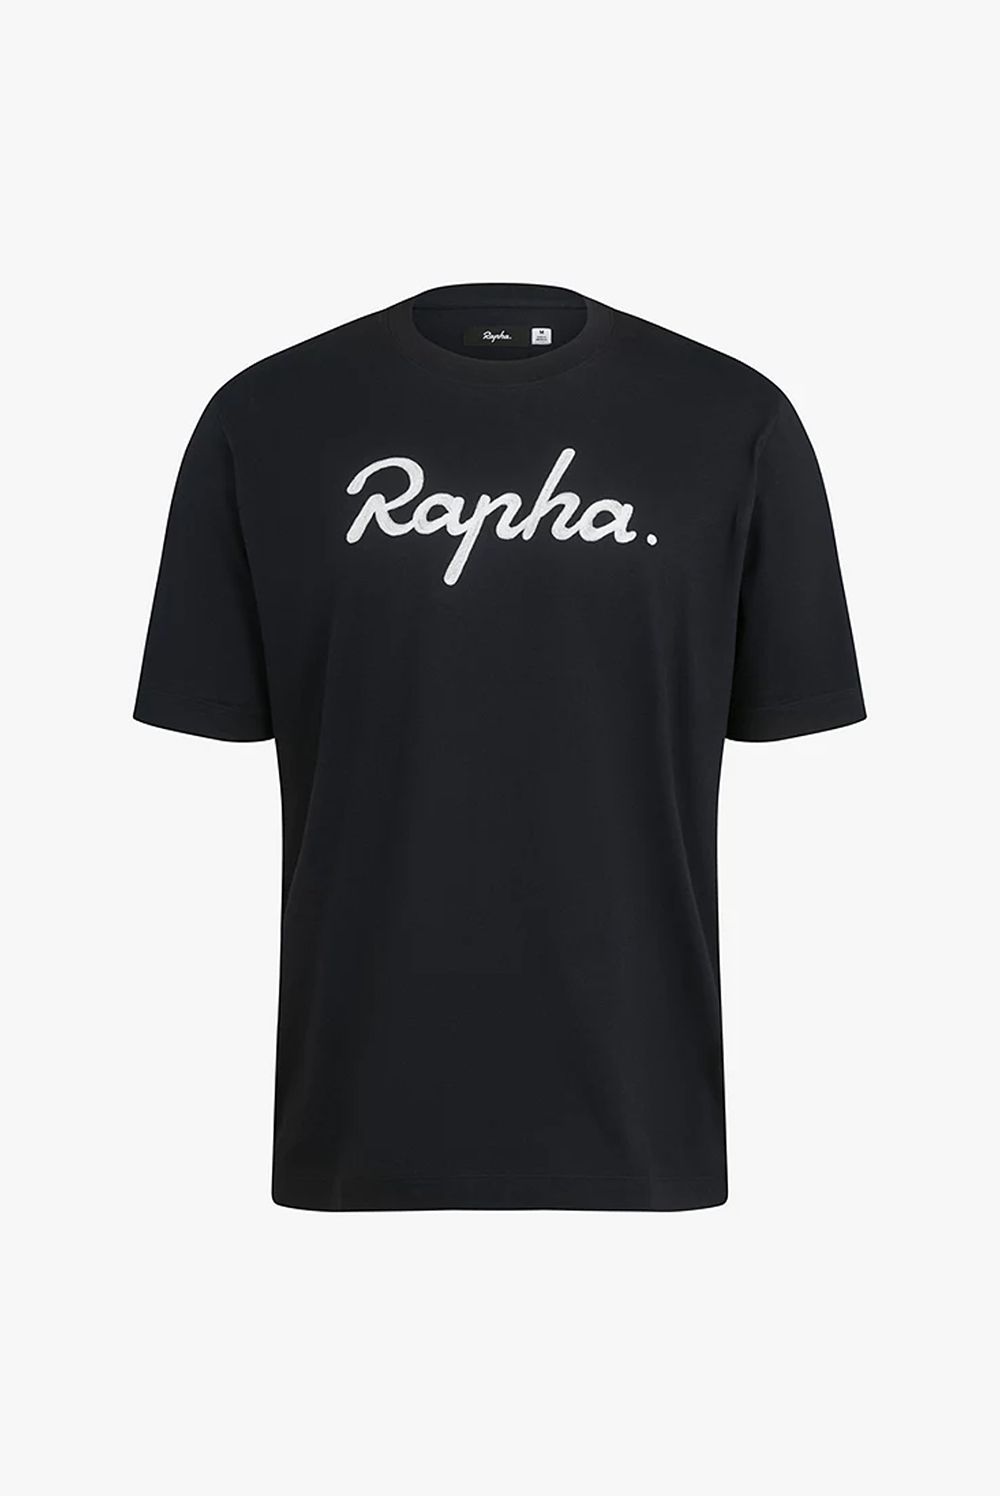 Rapha Chain Stitched Logo T-Shirt, £30